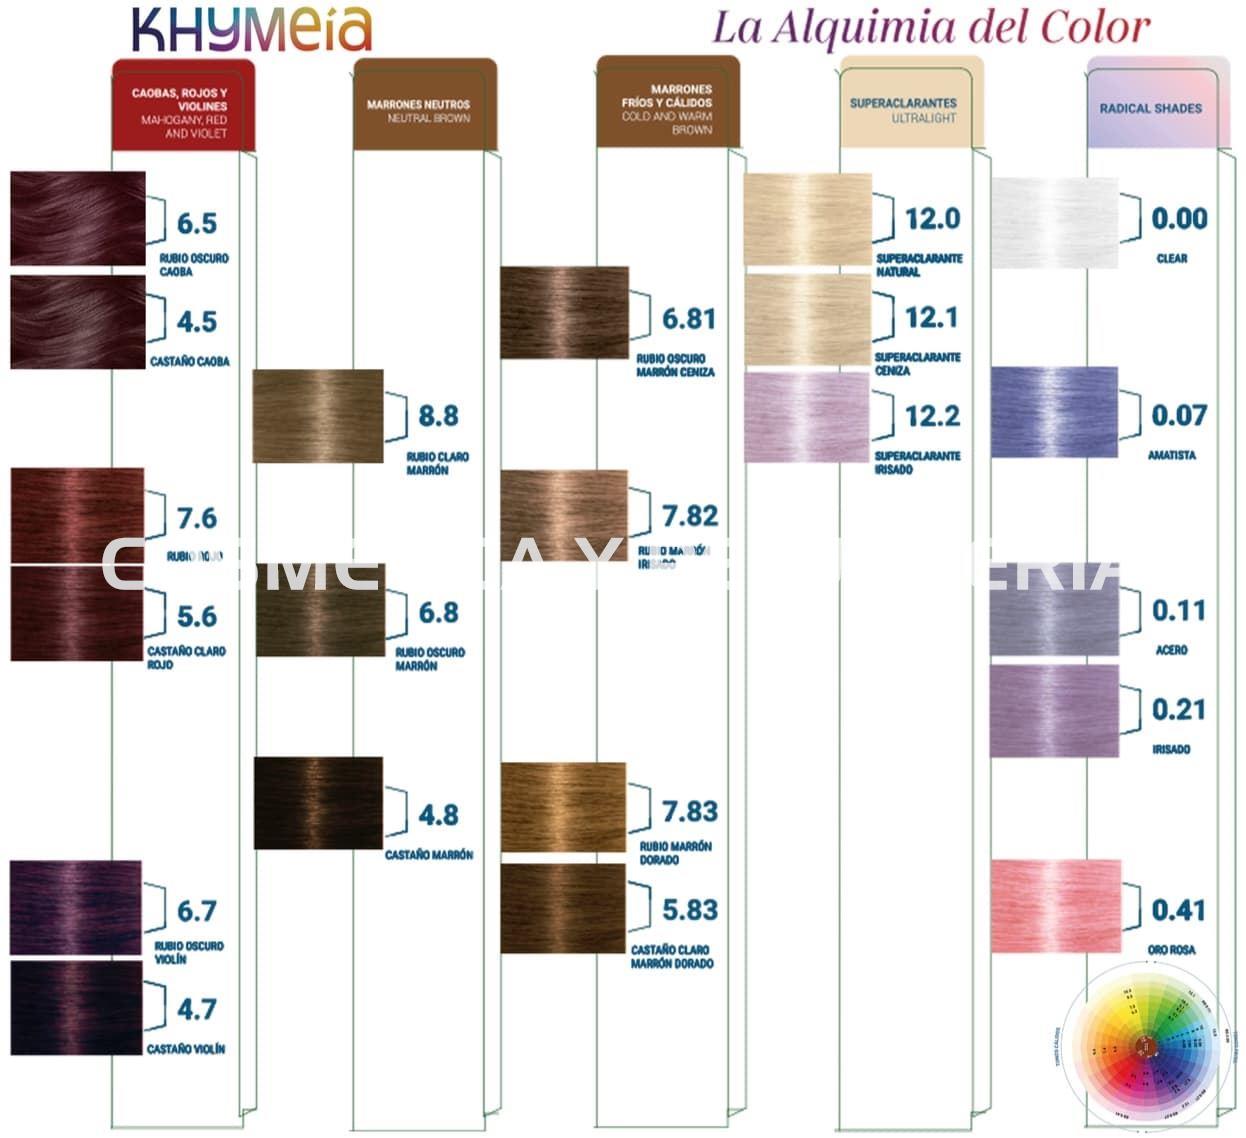 Tinte Khymeía color 7.6 - Imagen 2